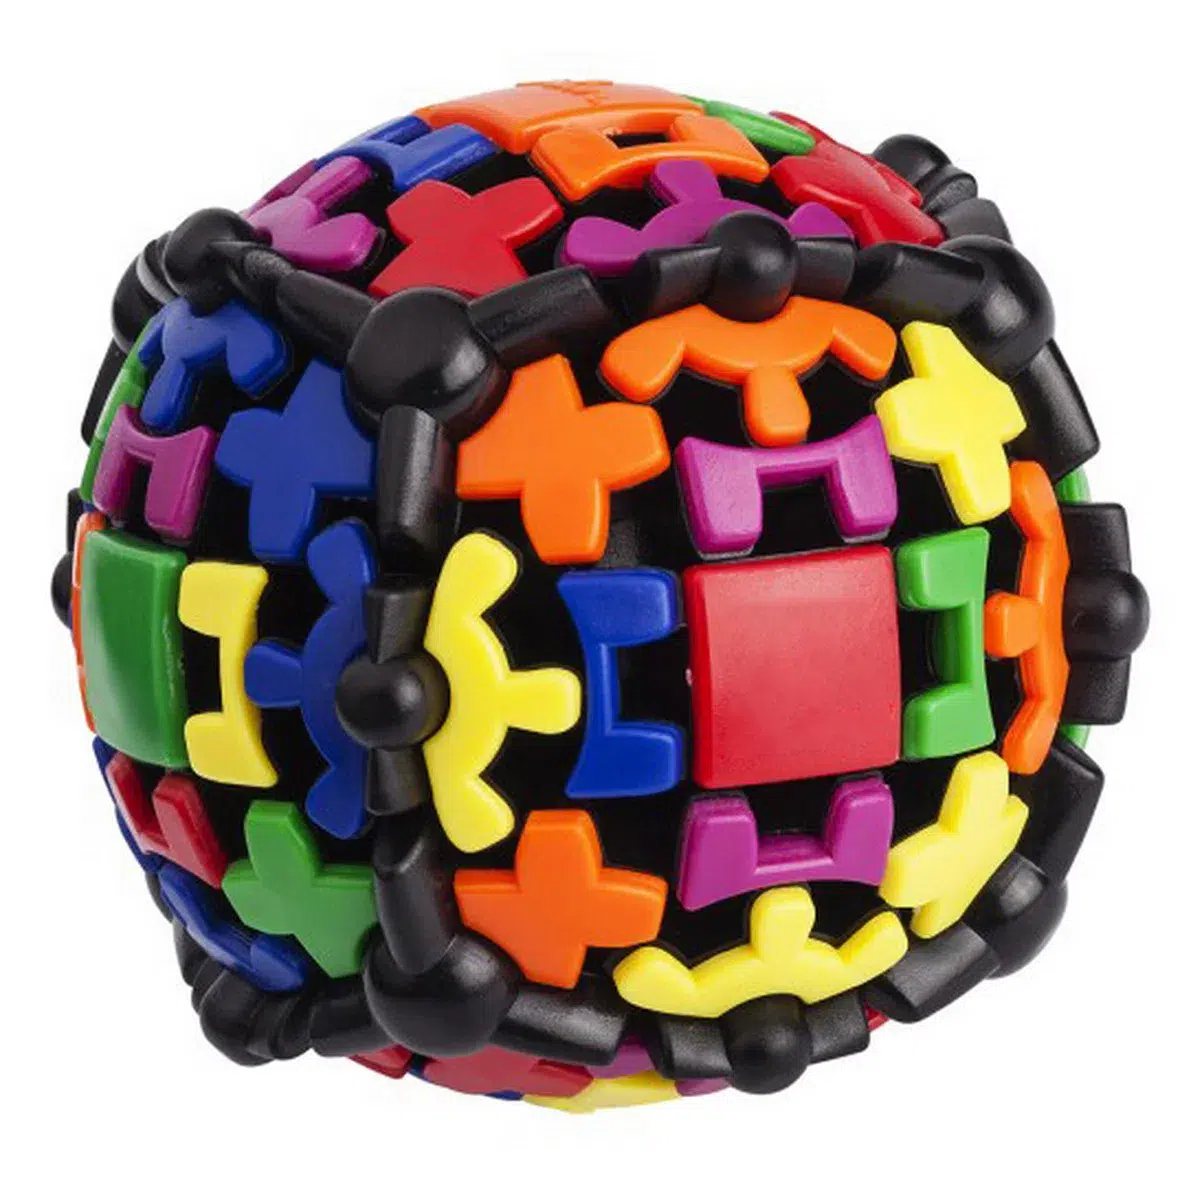 Meffert's Gear Ball Image 3